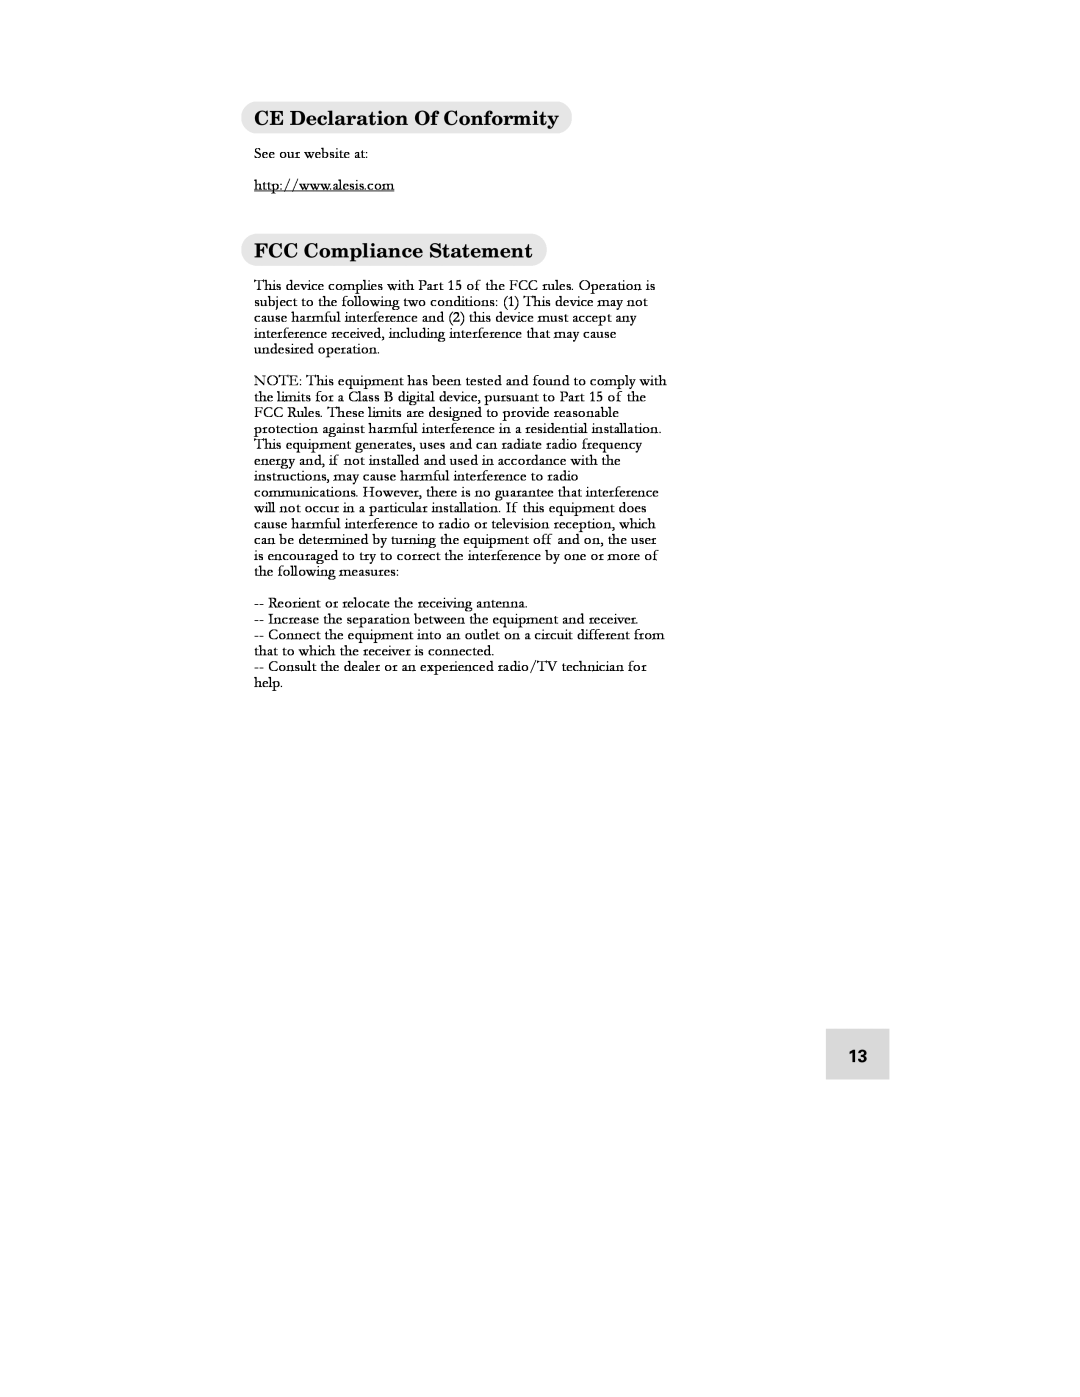 Alesis DEQ230D manual CE Declaration Of Conformity, FCC Compliance Statement 